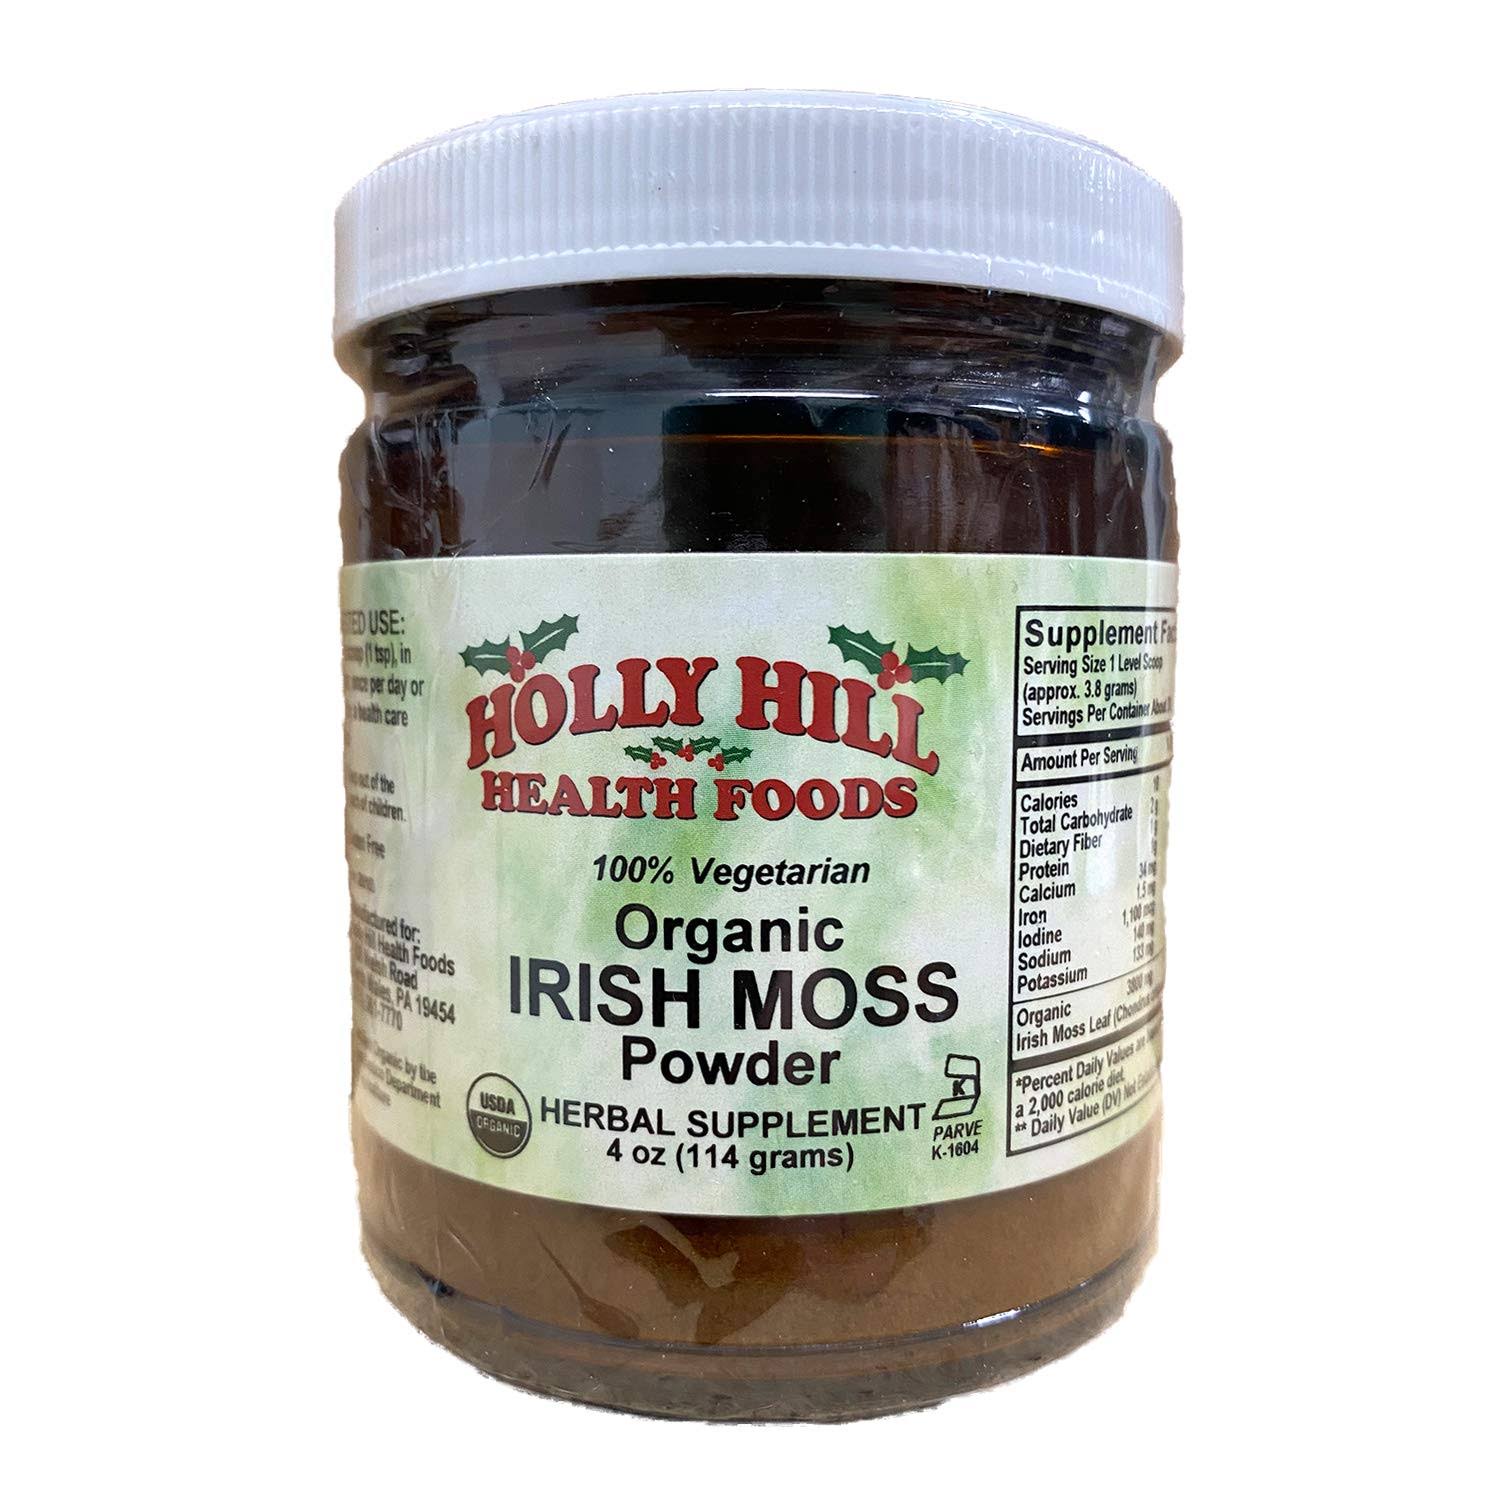 Holly Hill Health Foods Organic Irish Moss Powder, 4 Ounces